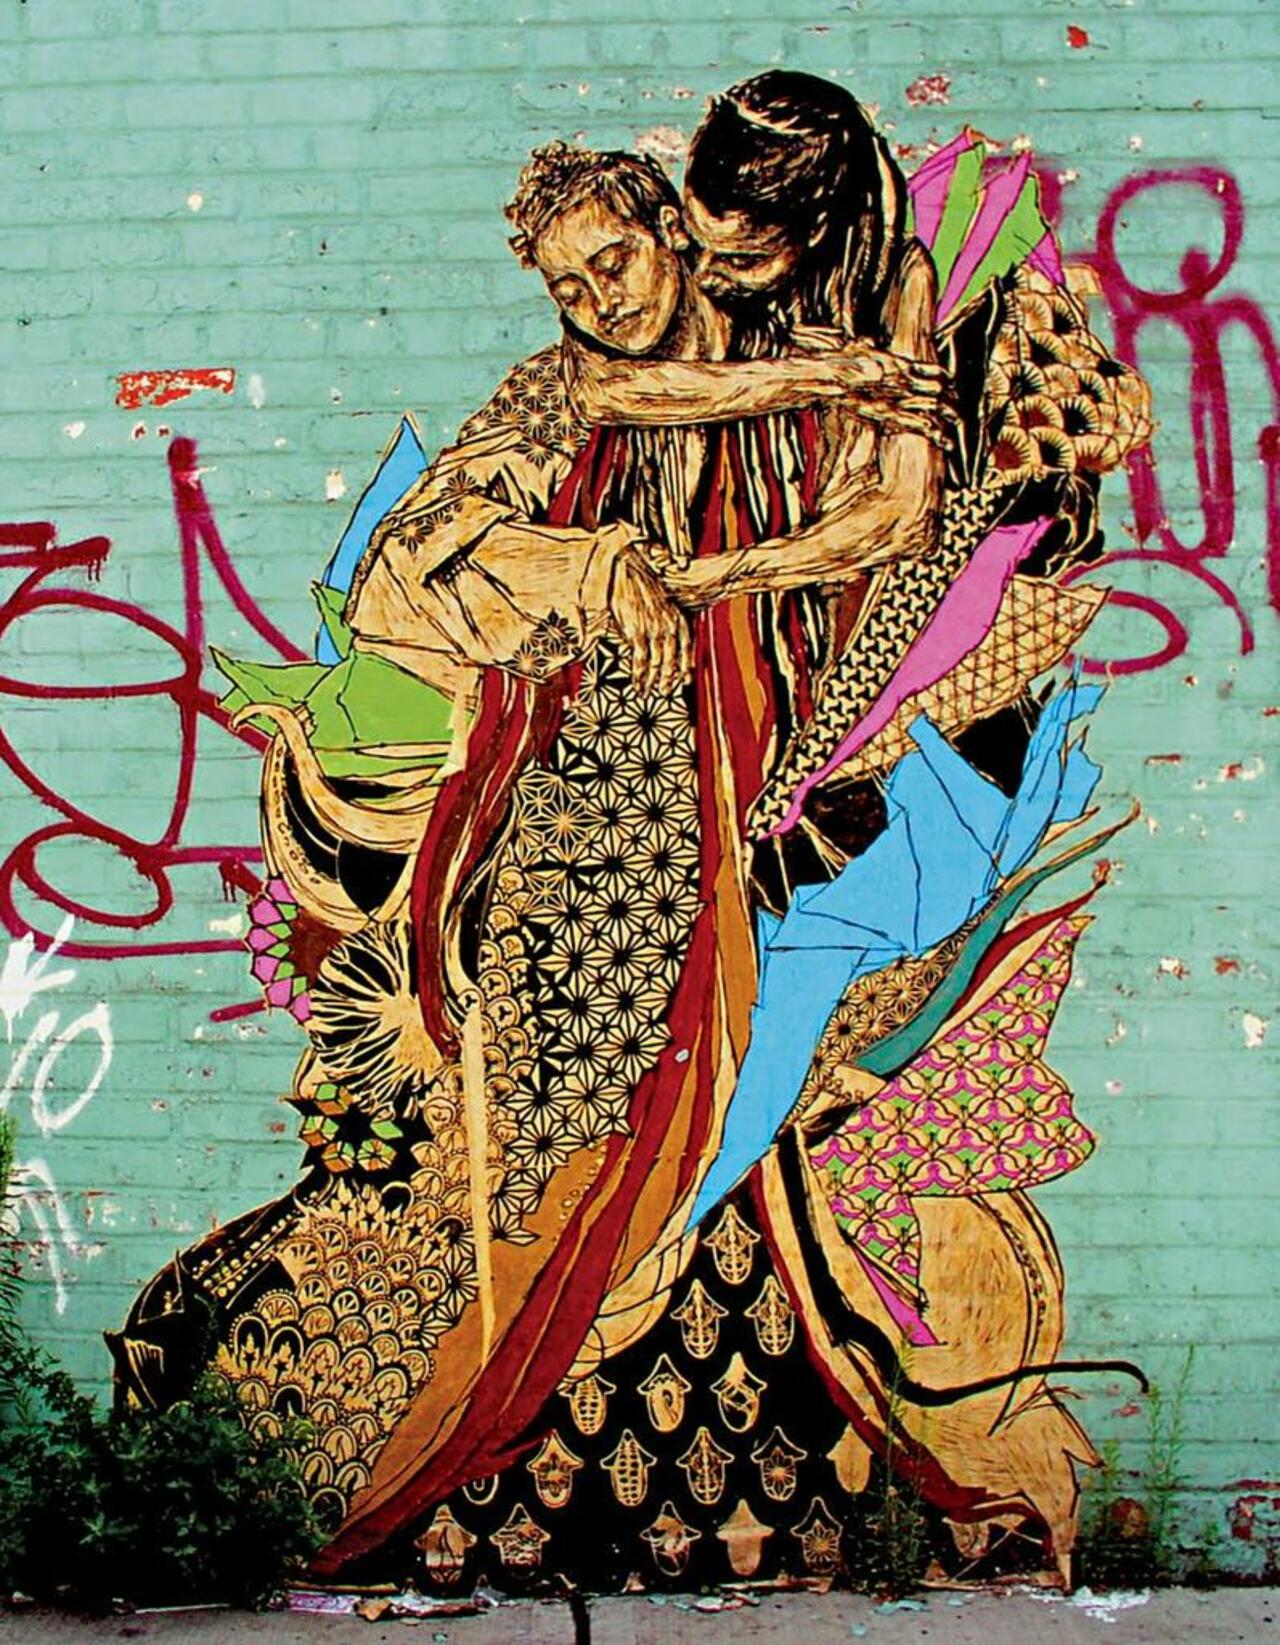 RT @ArtMuse79: #swoon
#graffiti #painting #streetart #artmuse #گرافیتی http://t.co/JWJZyRKI4k